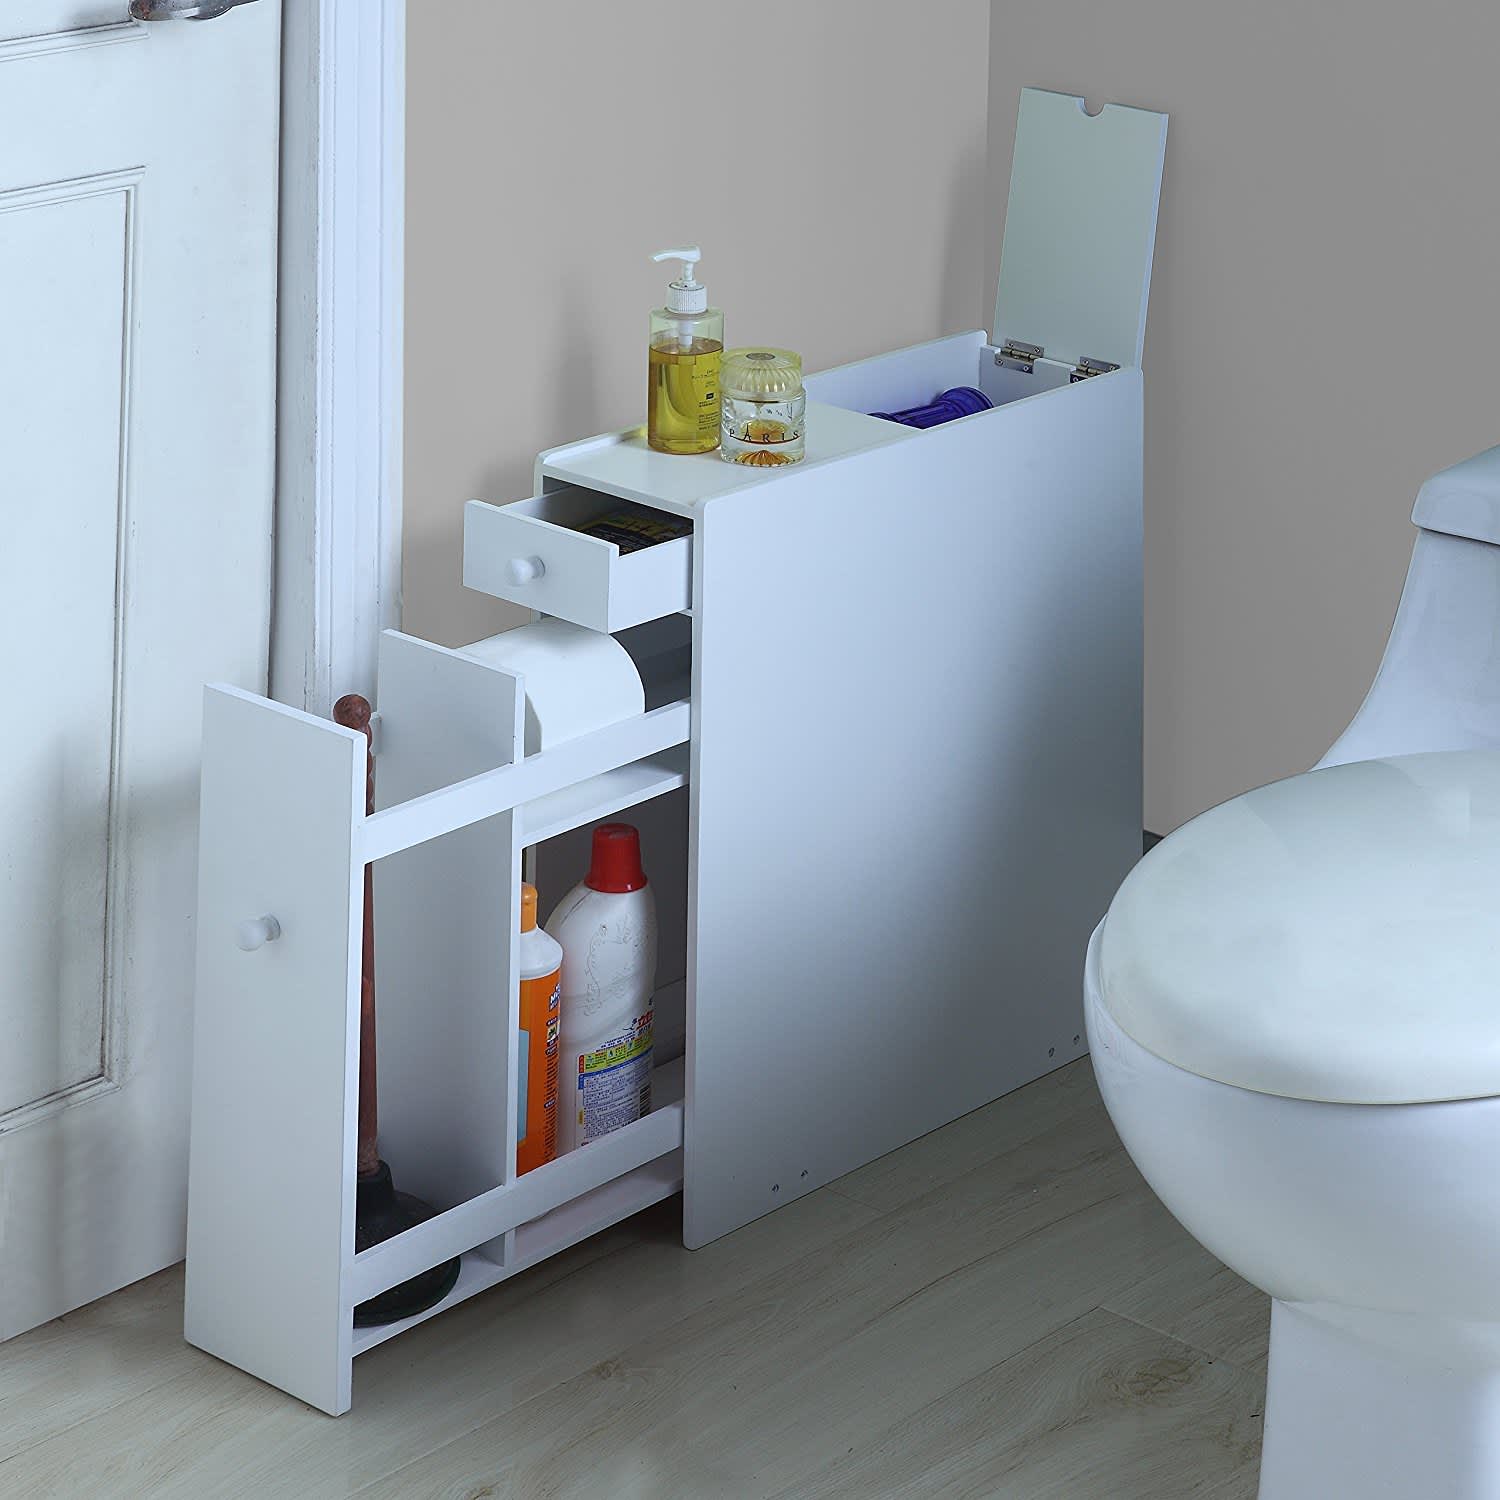  Bathroom  Storage  Ideas  Storage  For Small Bathrooms  